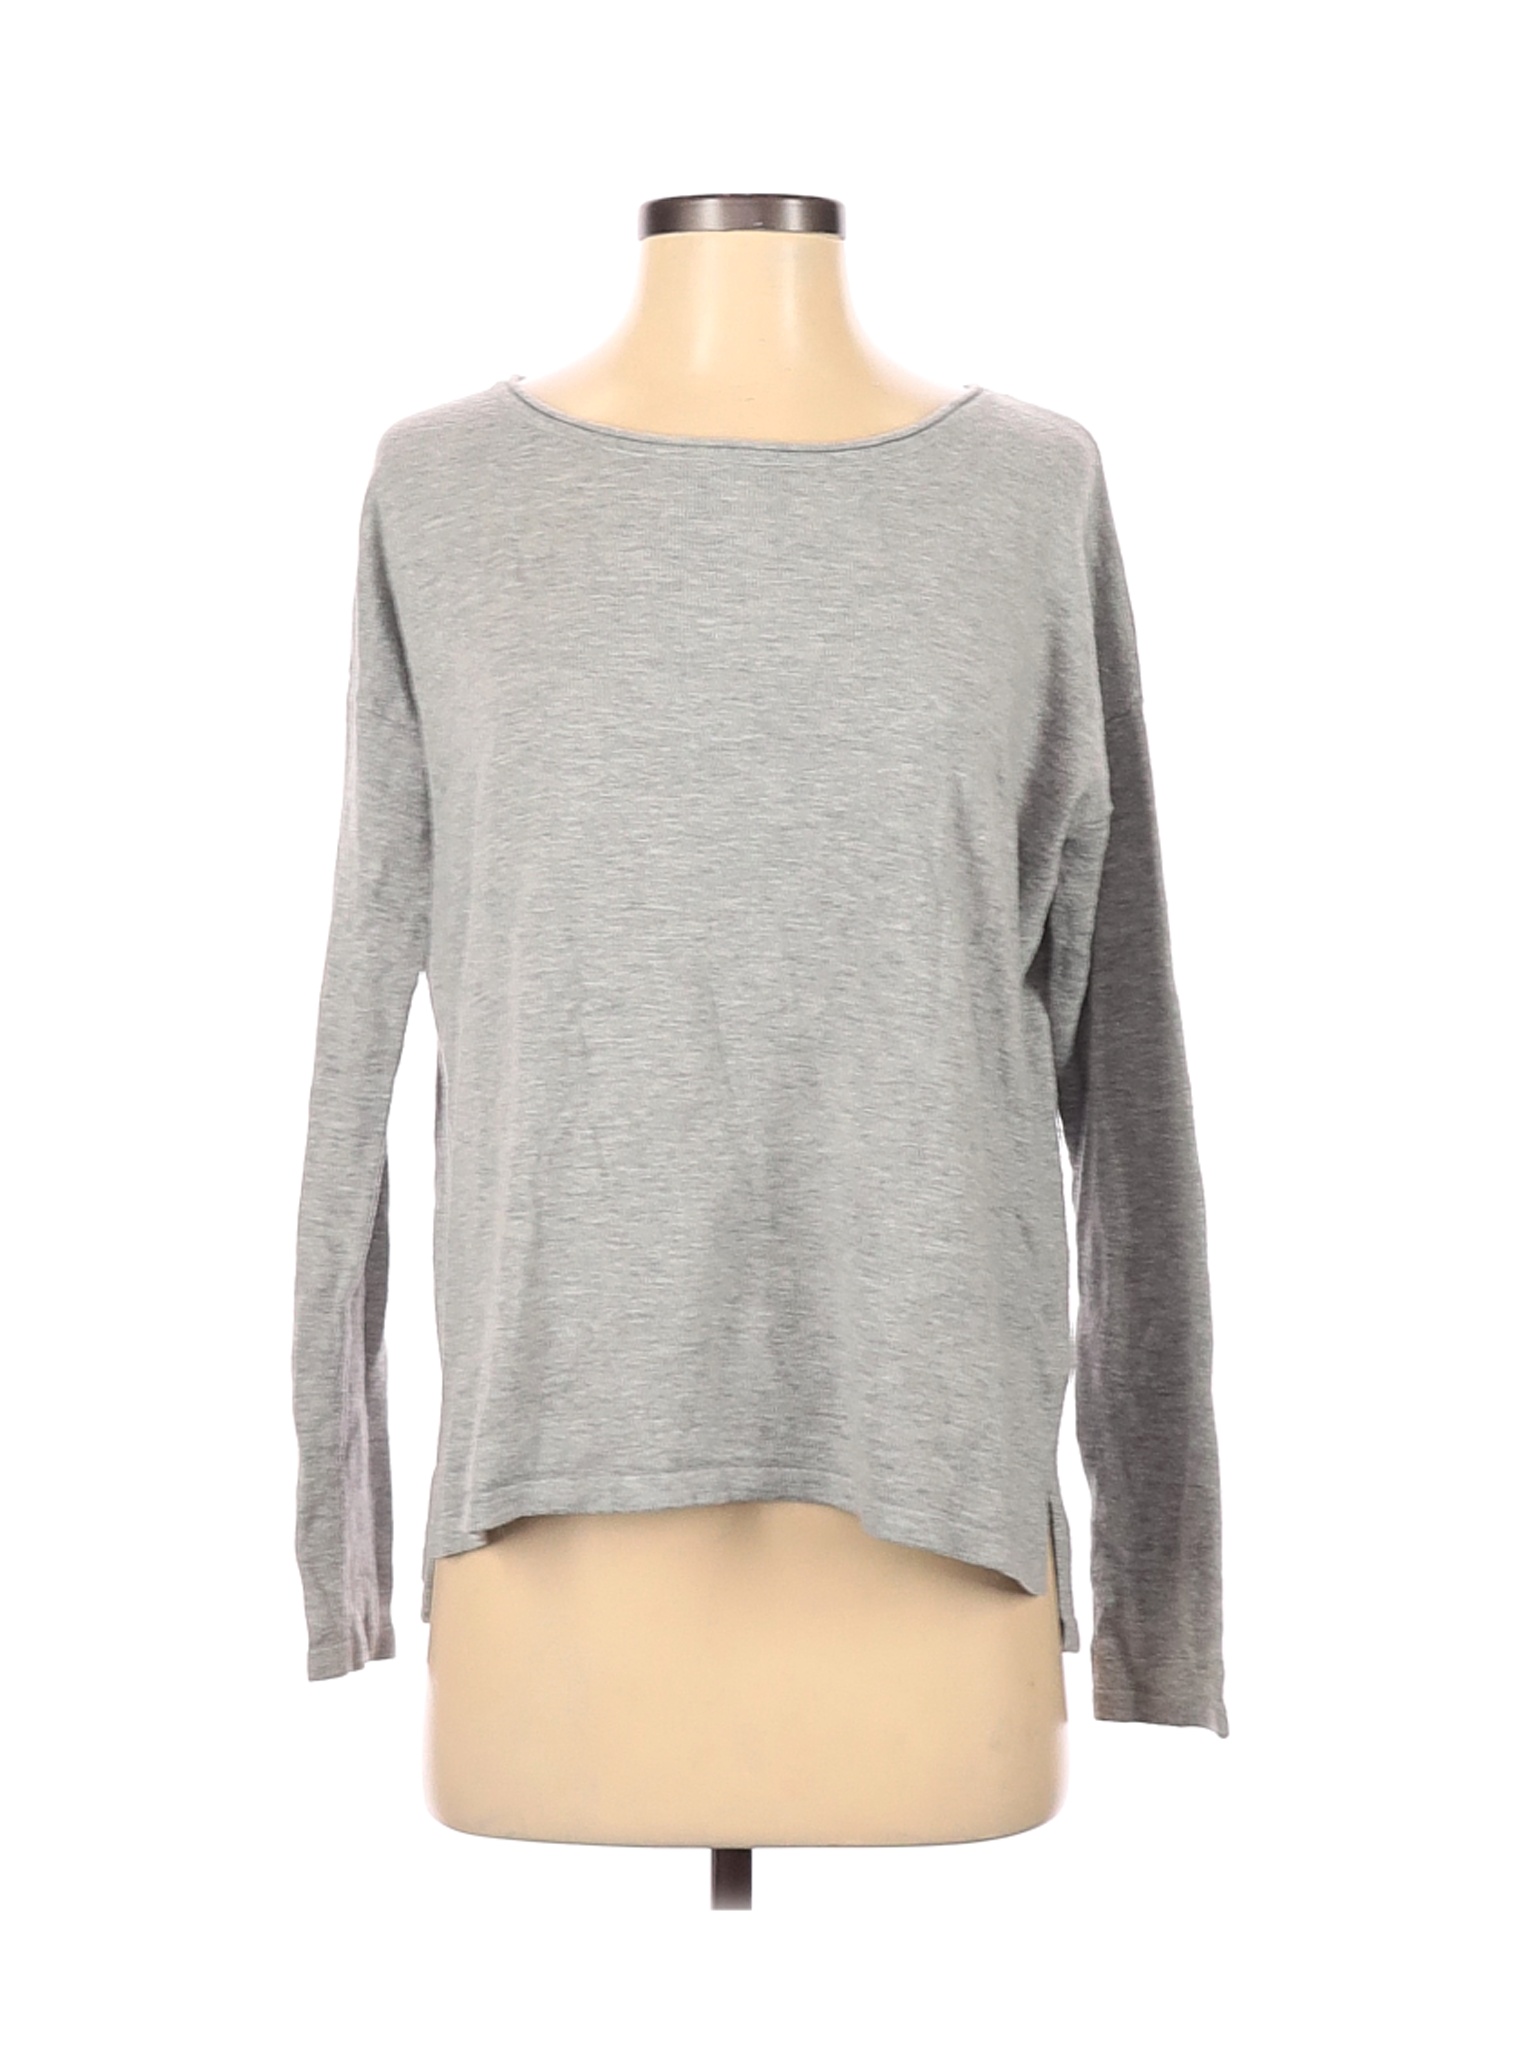 H&M Women Gray Pullover Sweater S | eBay